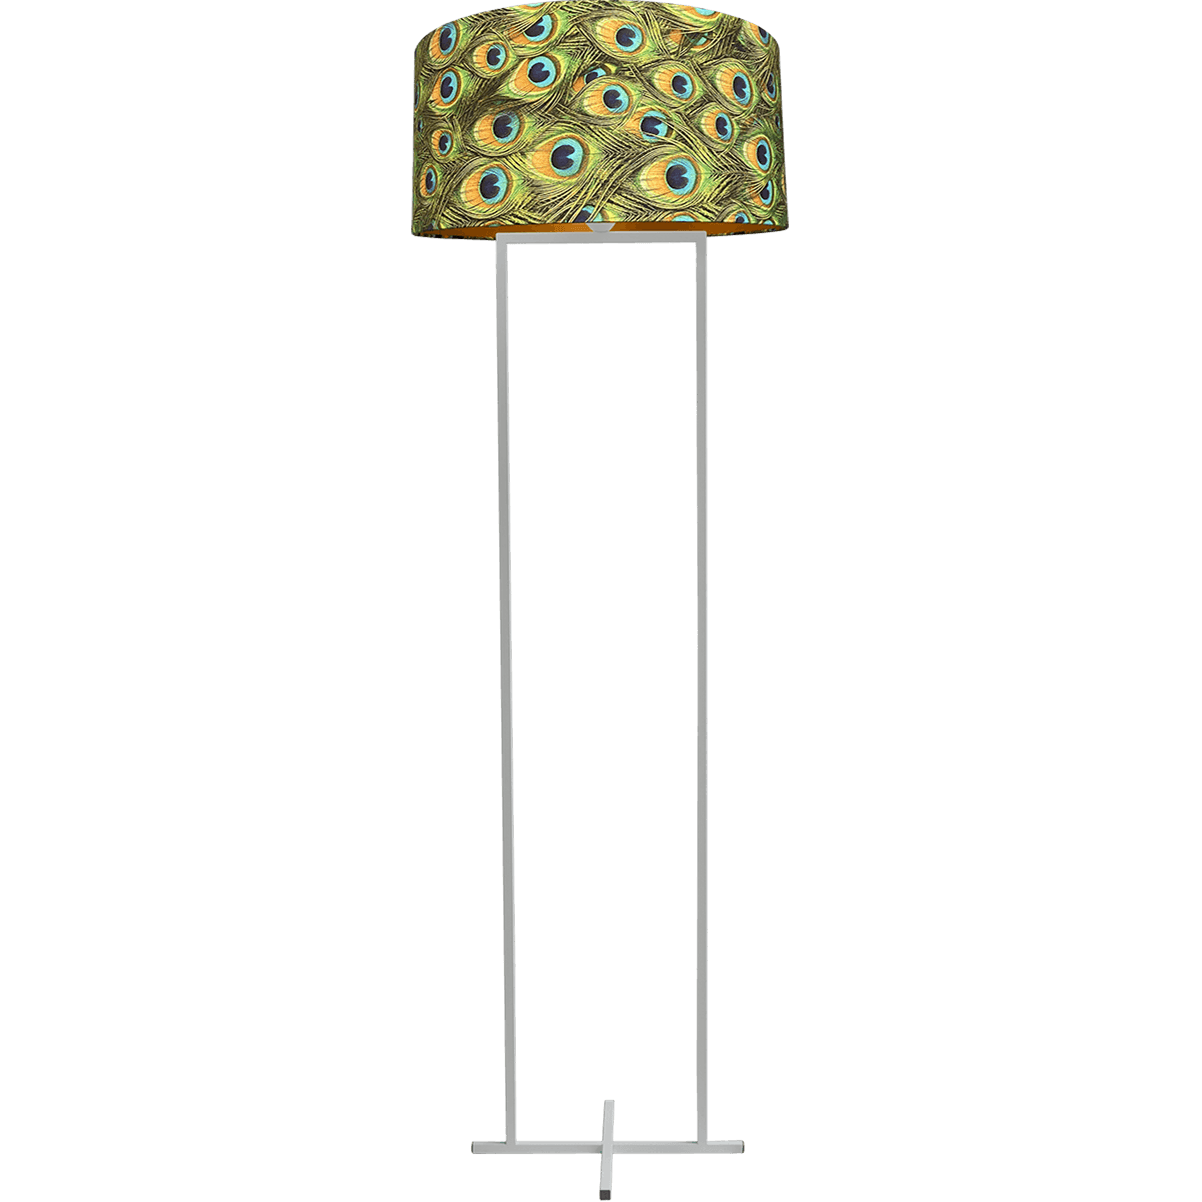 Vloerlamp Cross Rectangle wit structuur hoogte 158cm inclusief lampenkap met peacockenveren print Artik peacock 52/52/25 - MASTERLIGHT